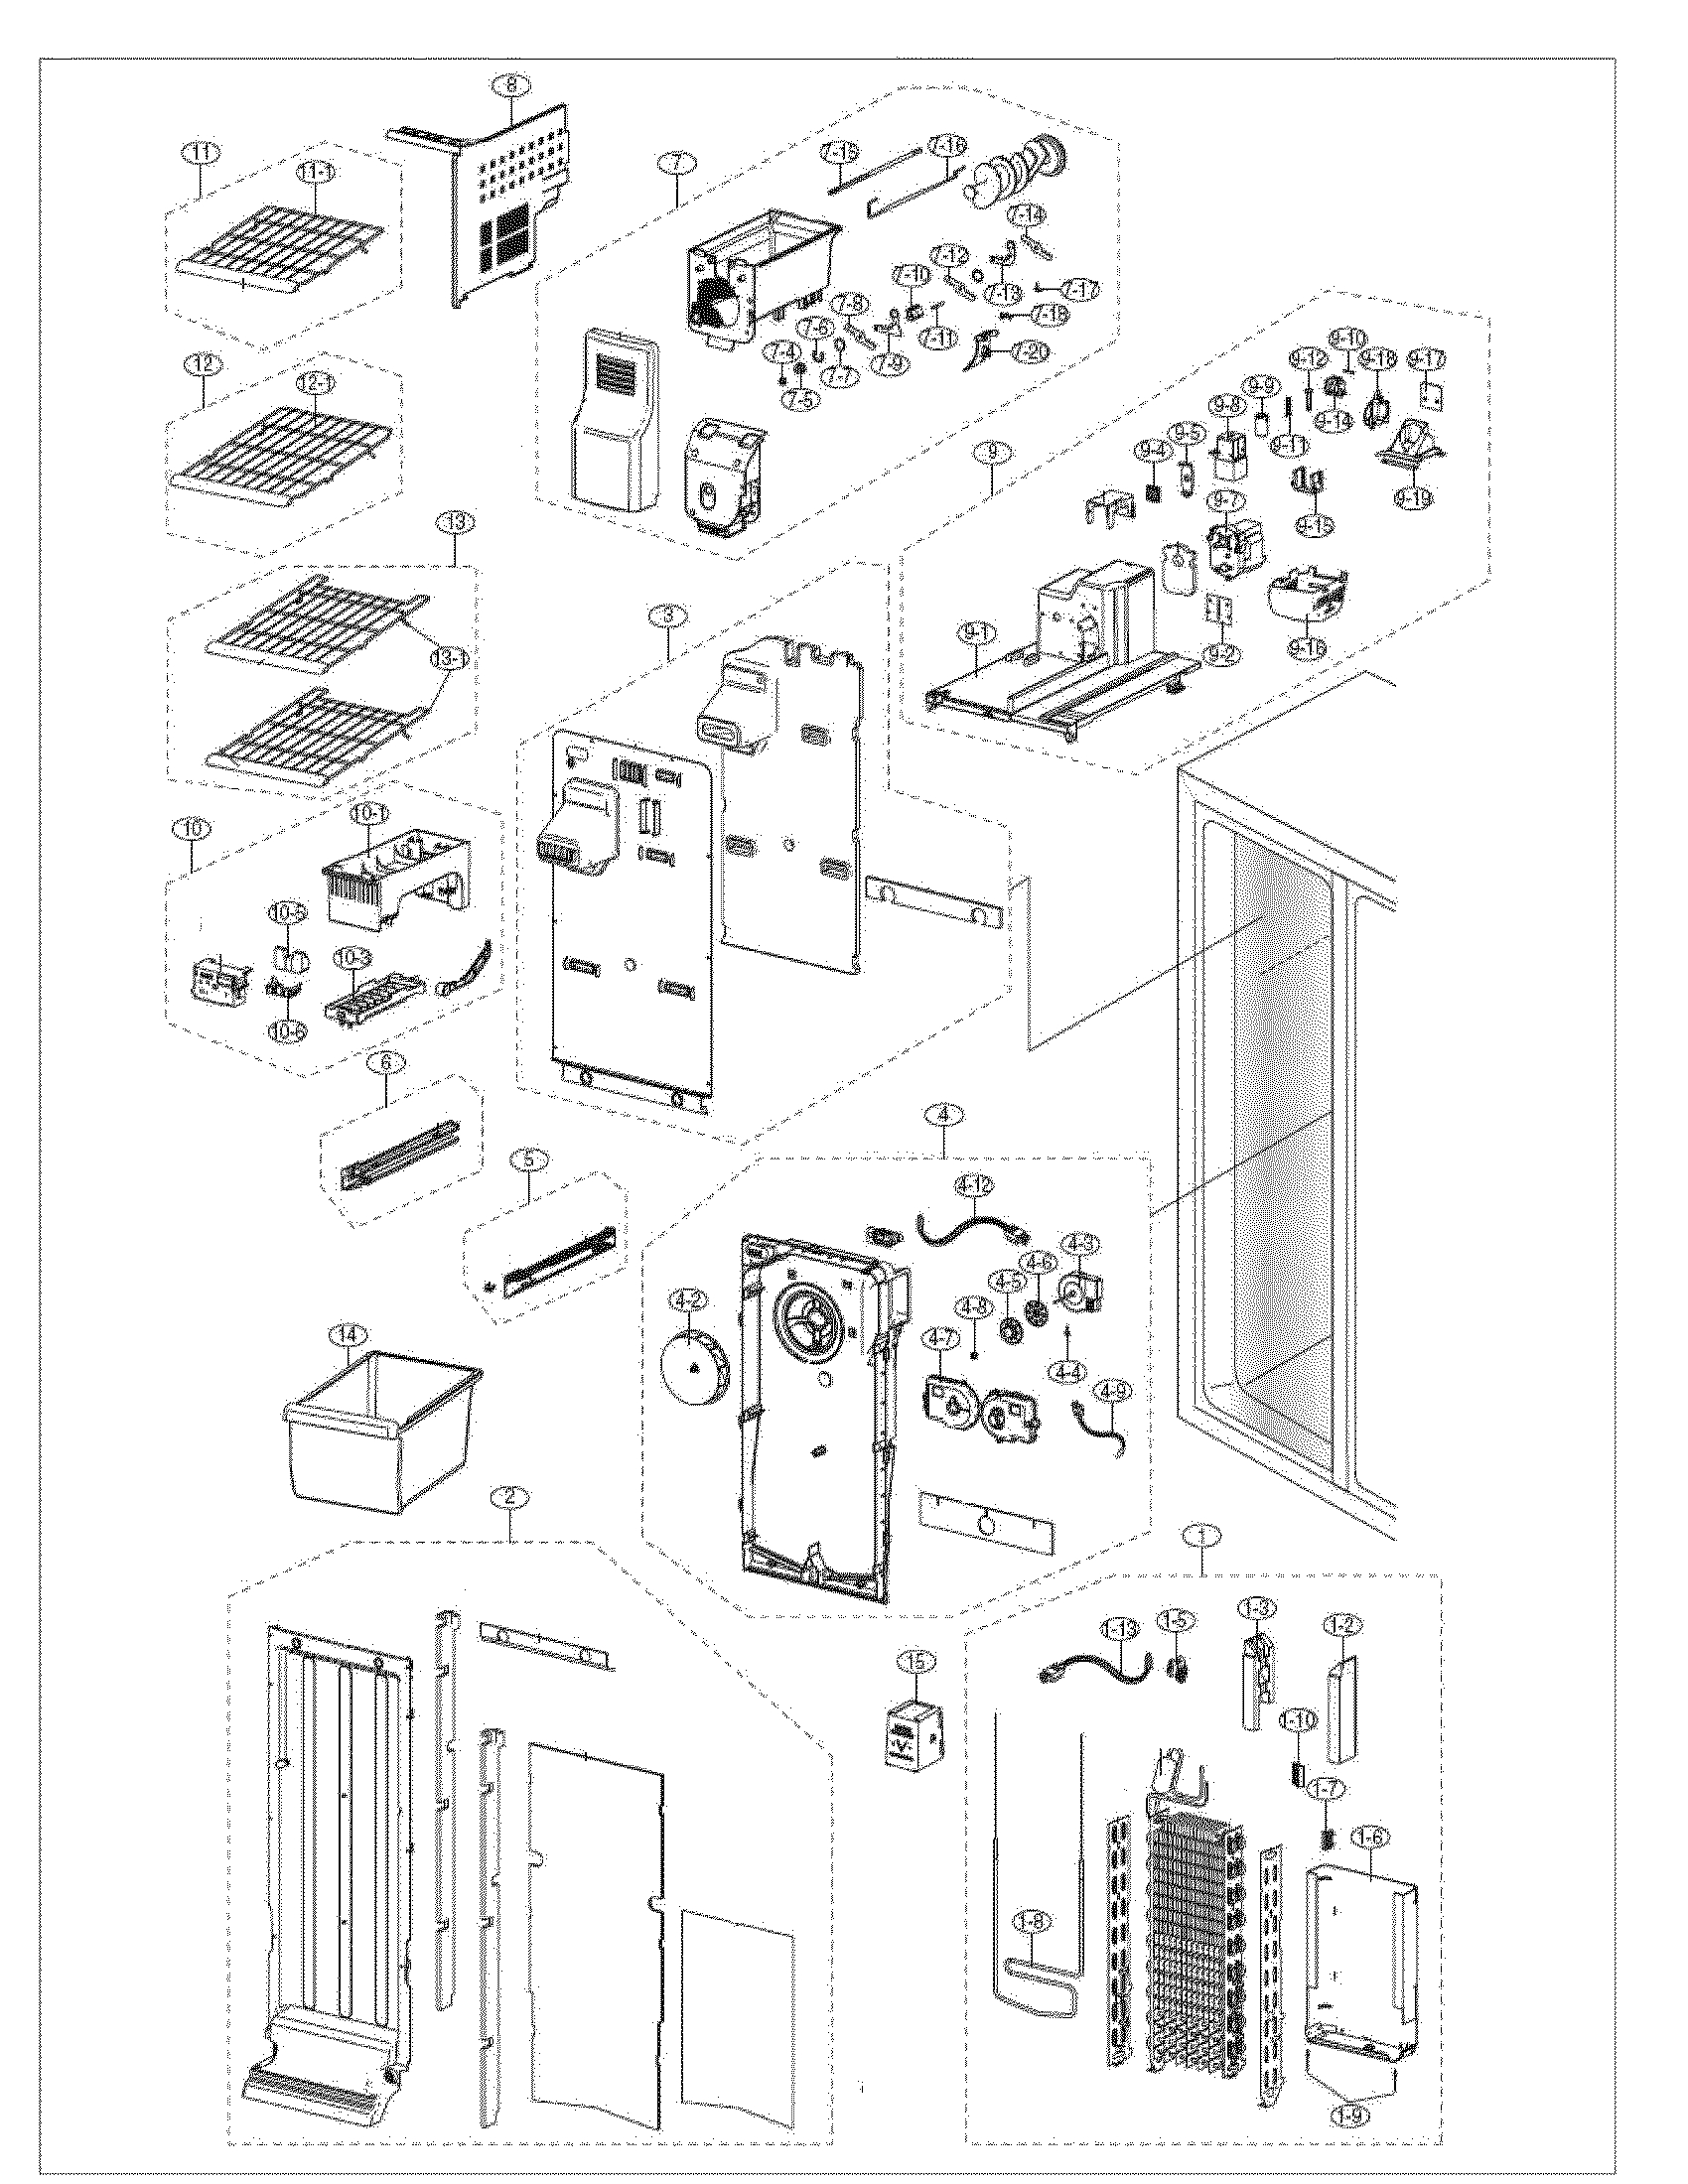 Samsung Model Rs261Mdbpxaa Side-By-Side Refrigerator pour Samsung Fridge Freezer Manual 